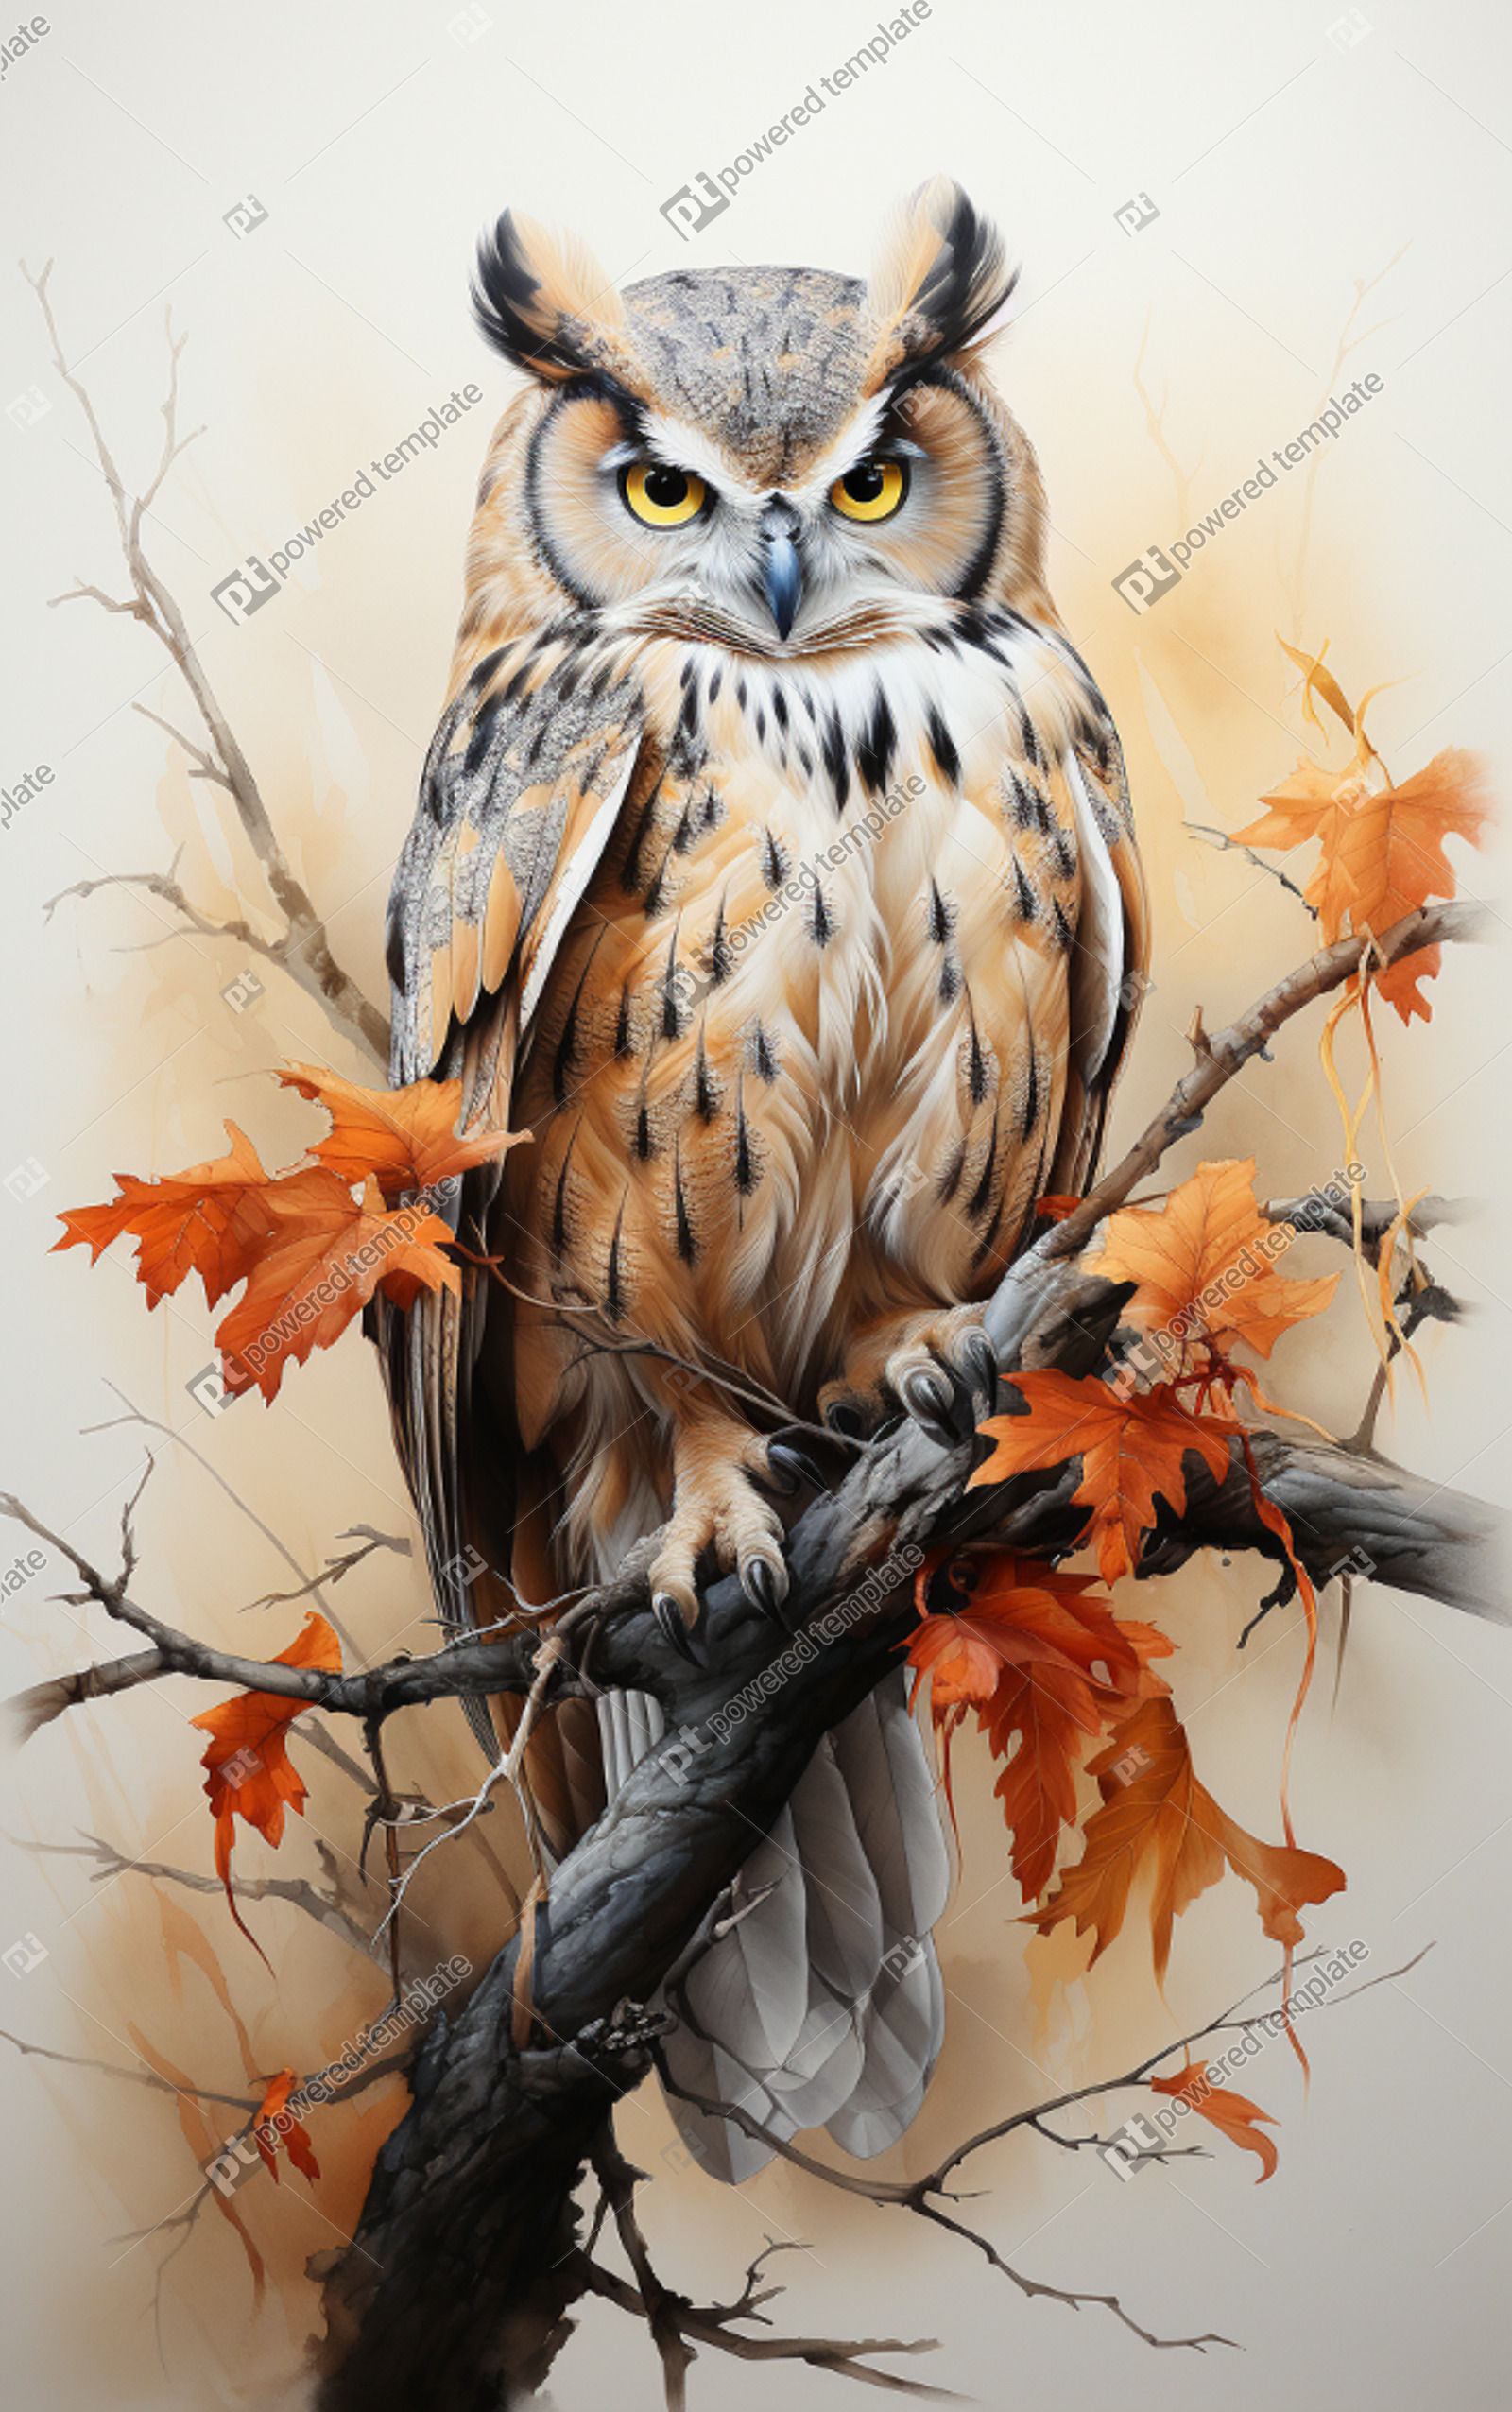 SNOWY OWL pencil drawing art print A4 / A3 signed artwork by UK artist  G.Tymon | eBay